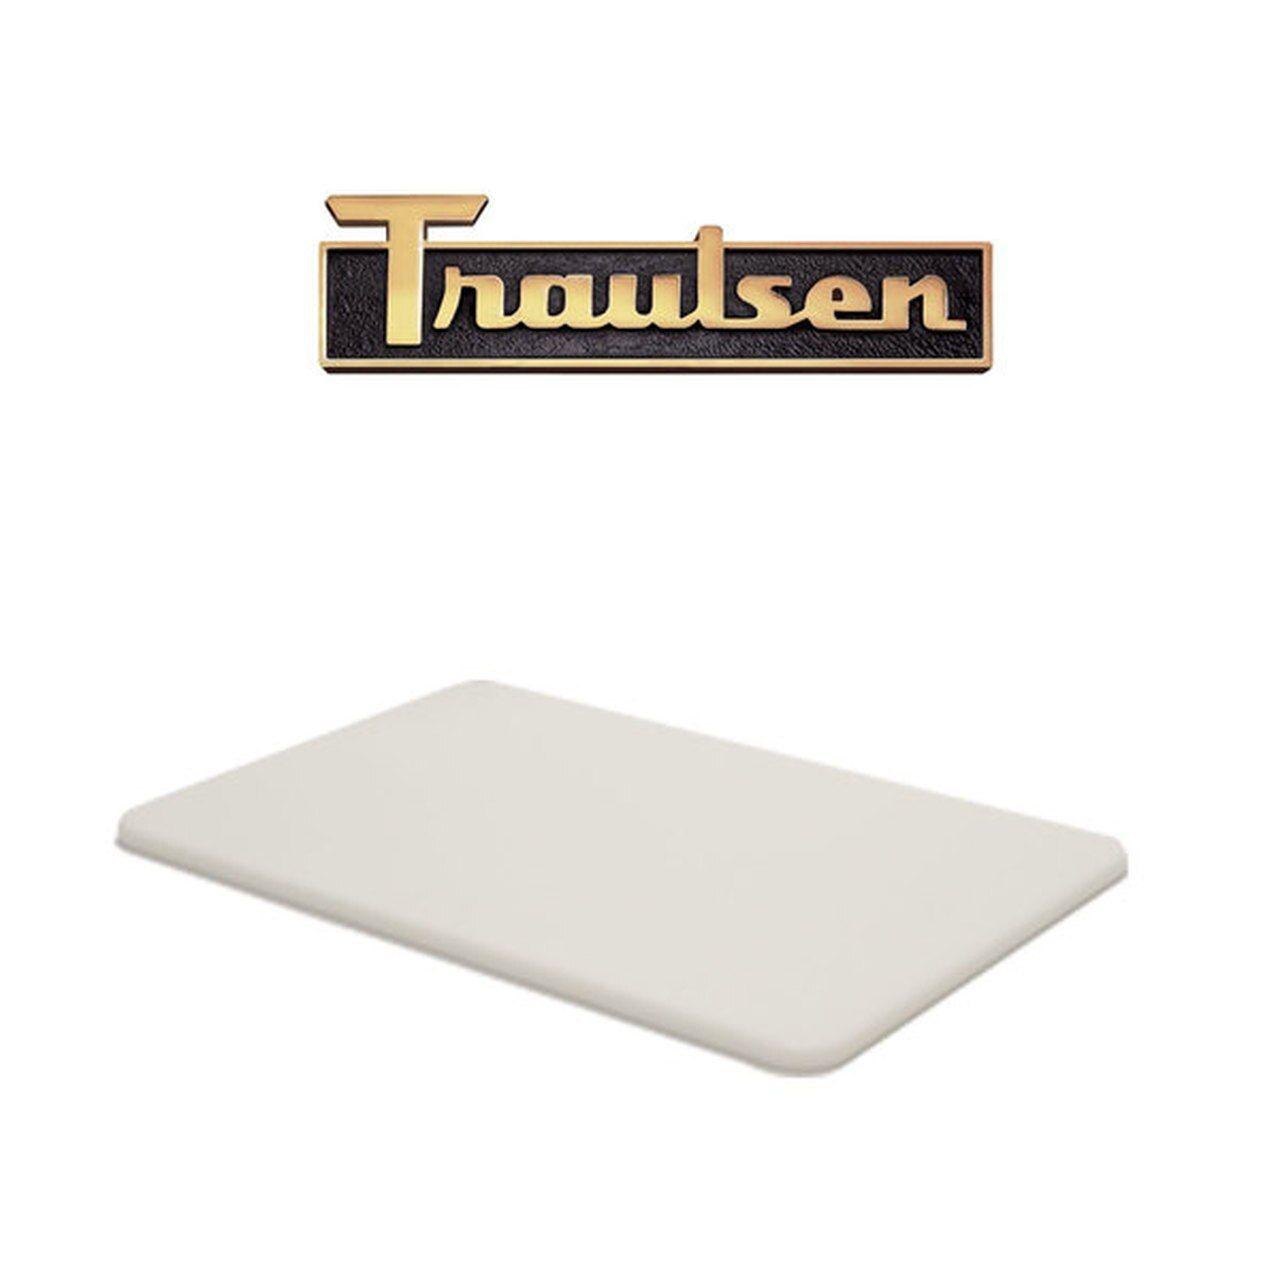 Traulsen Logo - OEM Cutting Board - Traulsen - P#: 340-60172-12